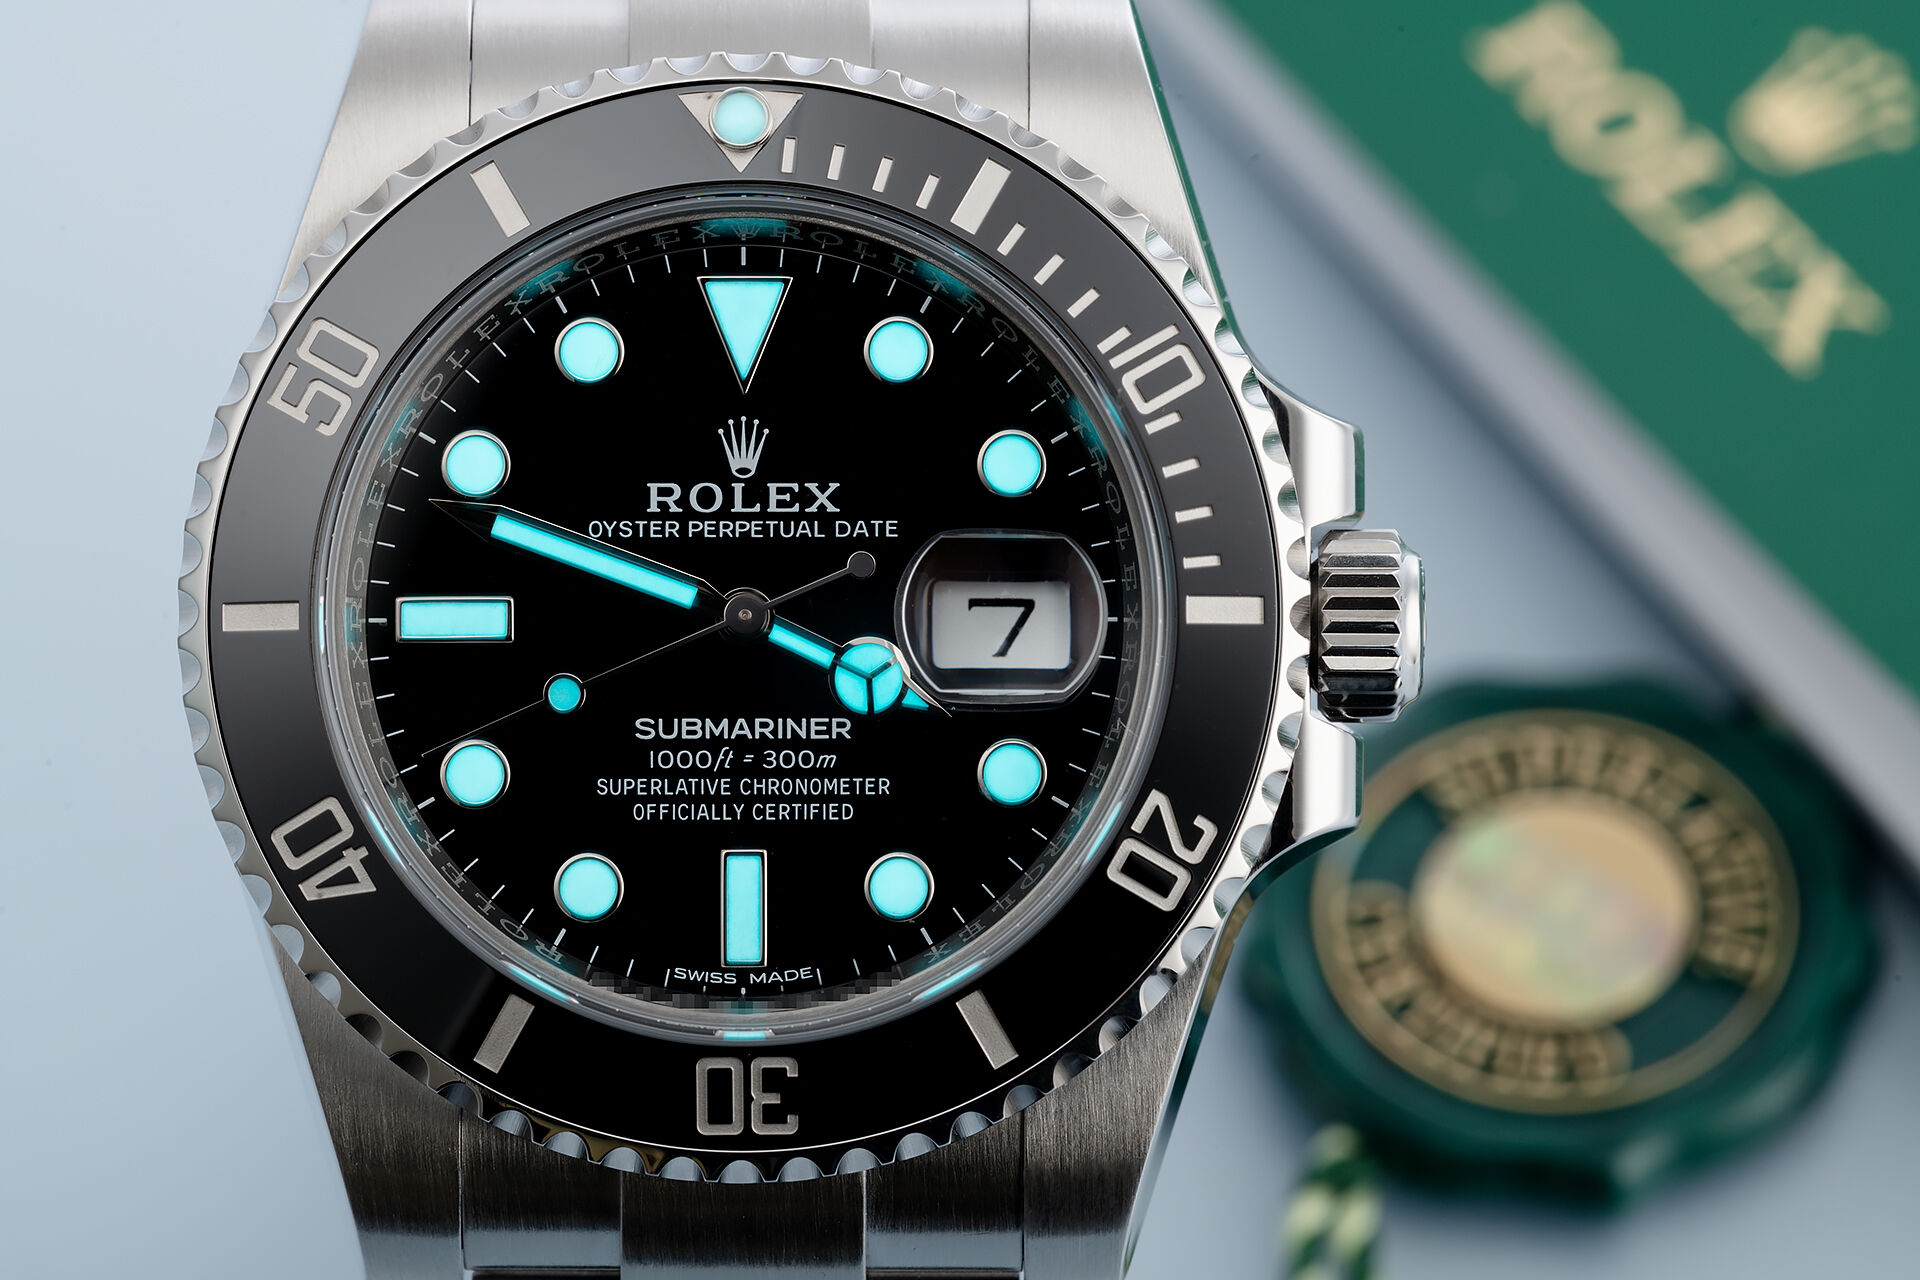 ref 116610LN | Box & Certificate | Rolex Submariner Date